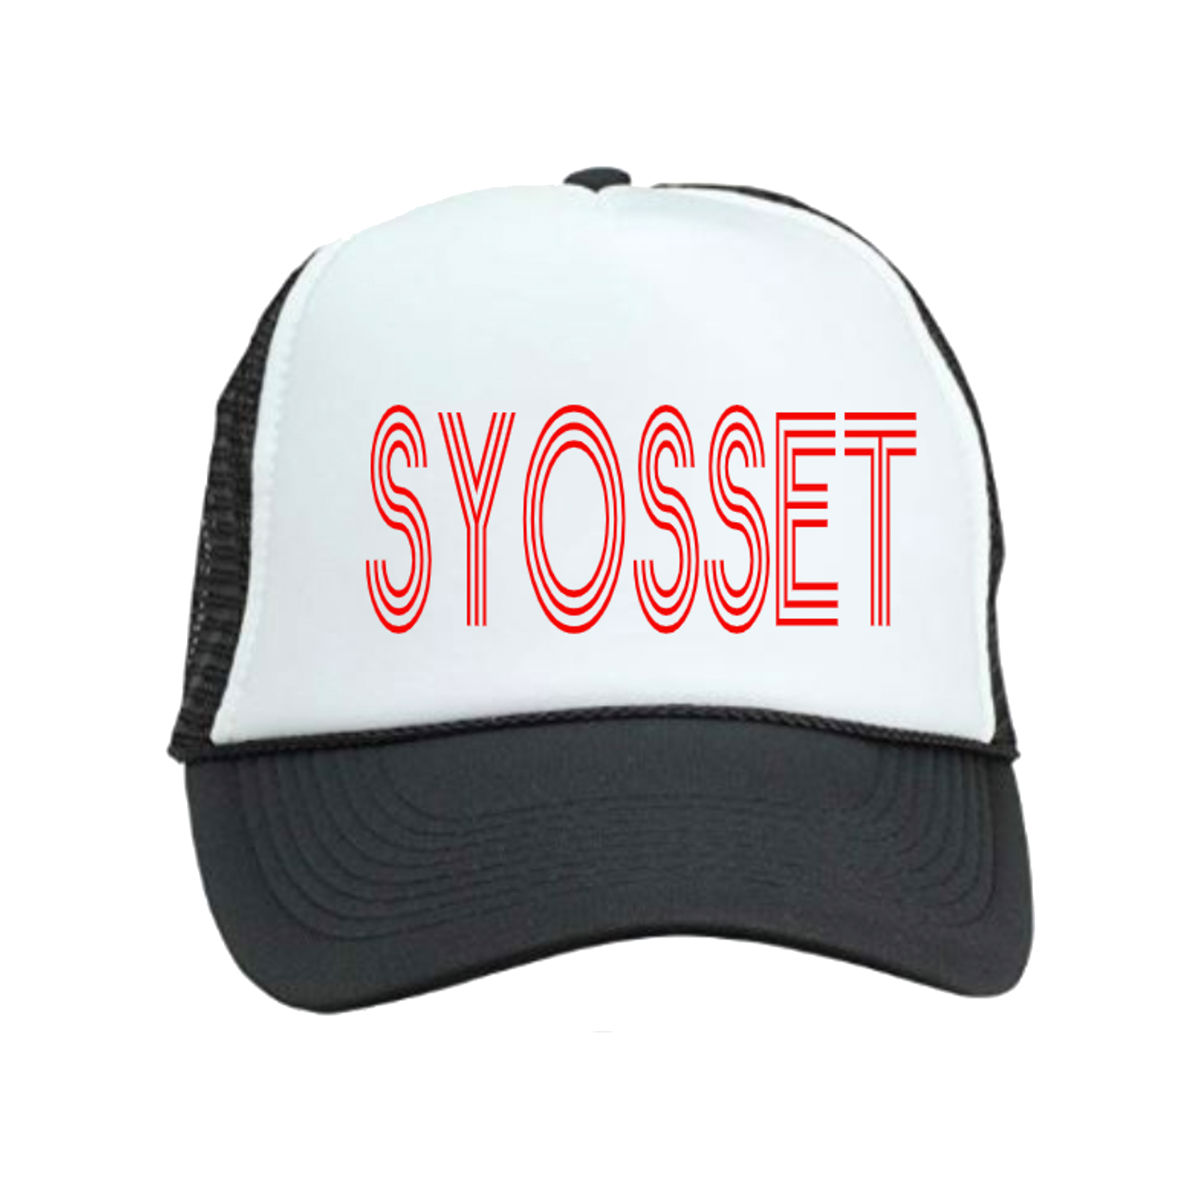 Robbins Lane Syosset Trucker Hat